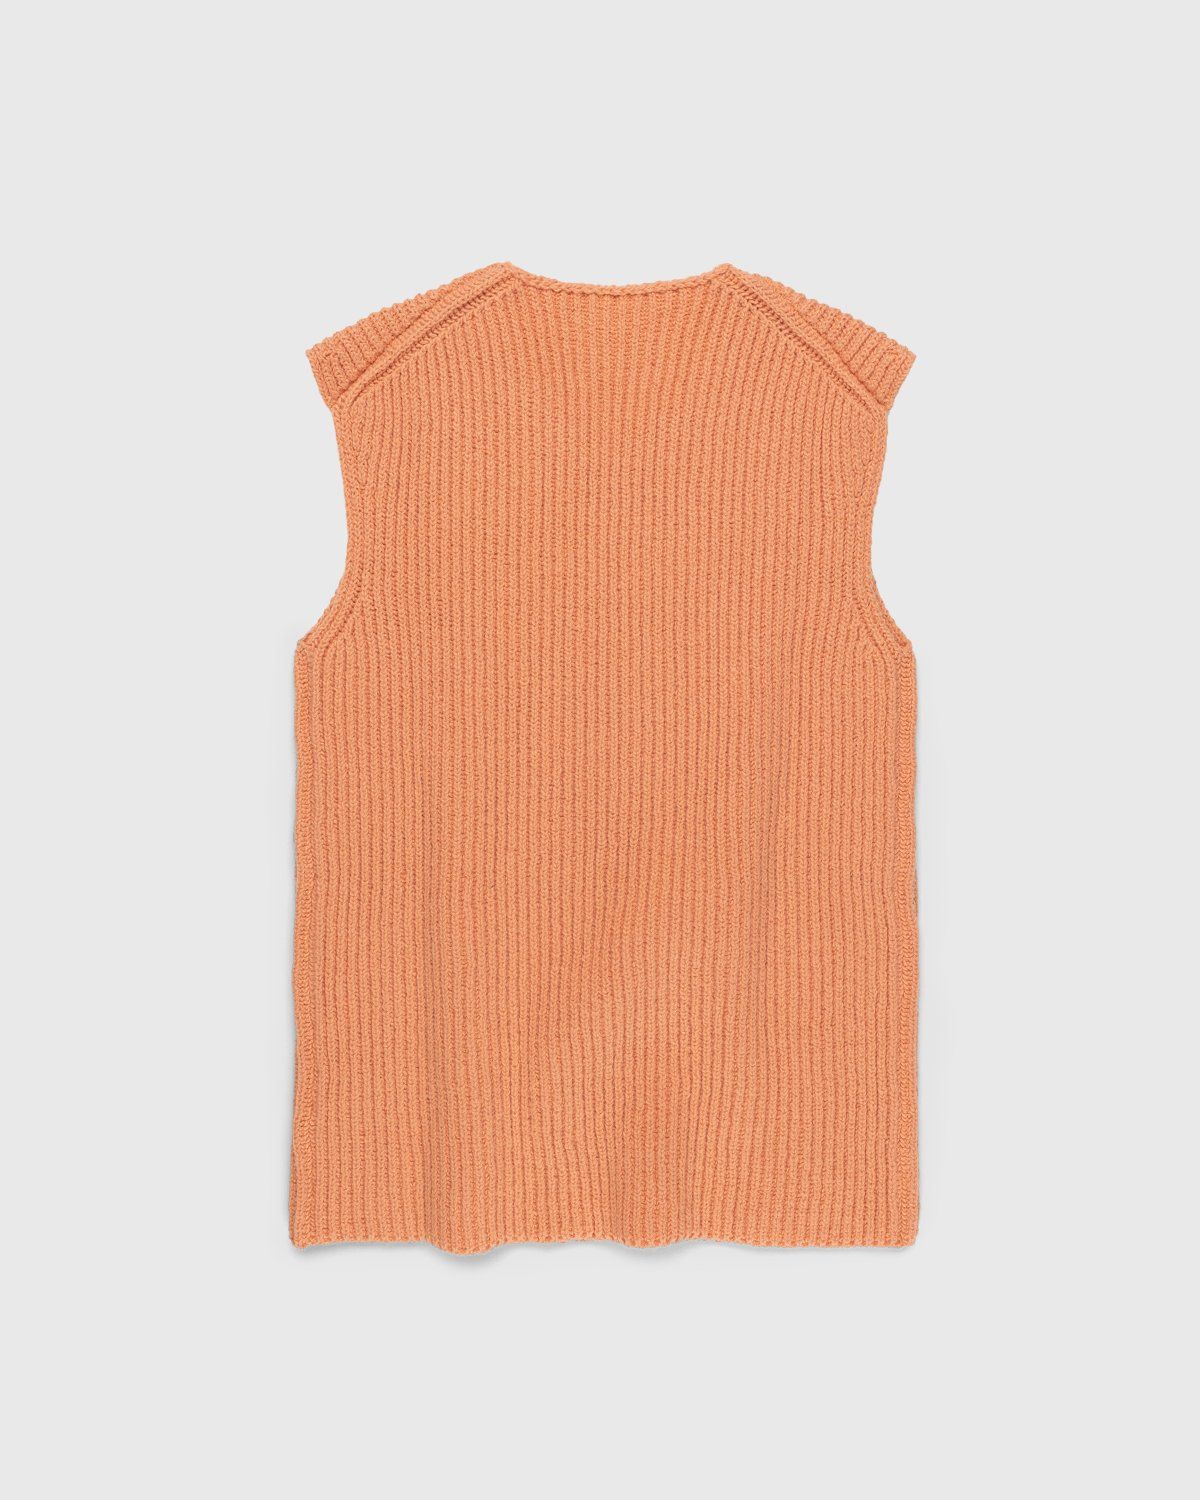 Jil Sander – Rib Knit Vest Orange - Knitwear - Orange - Image 2